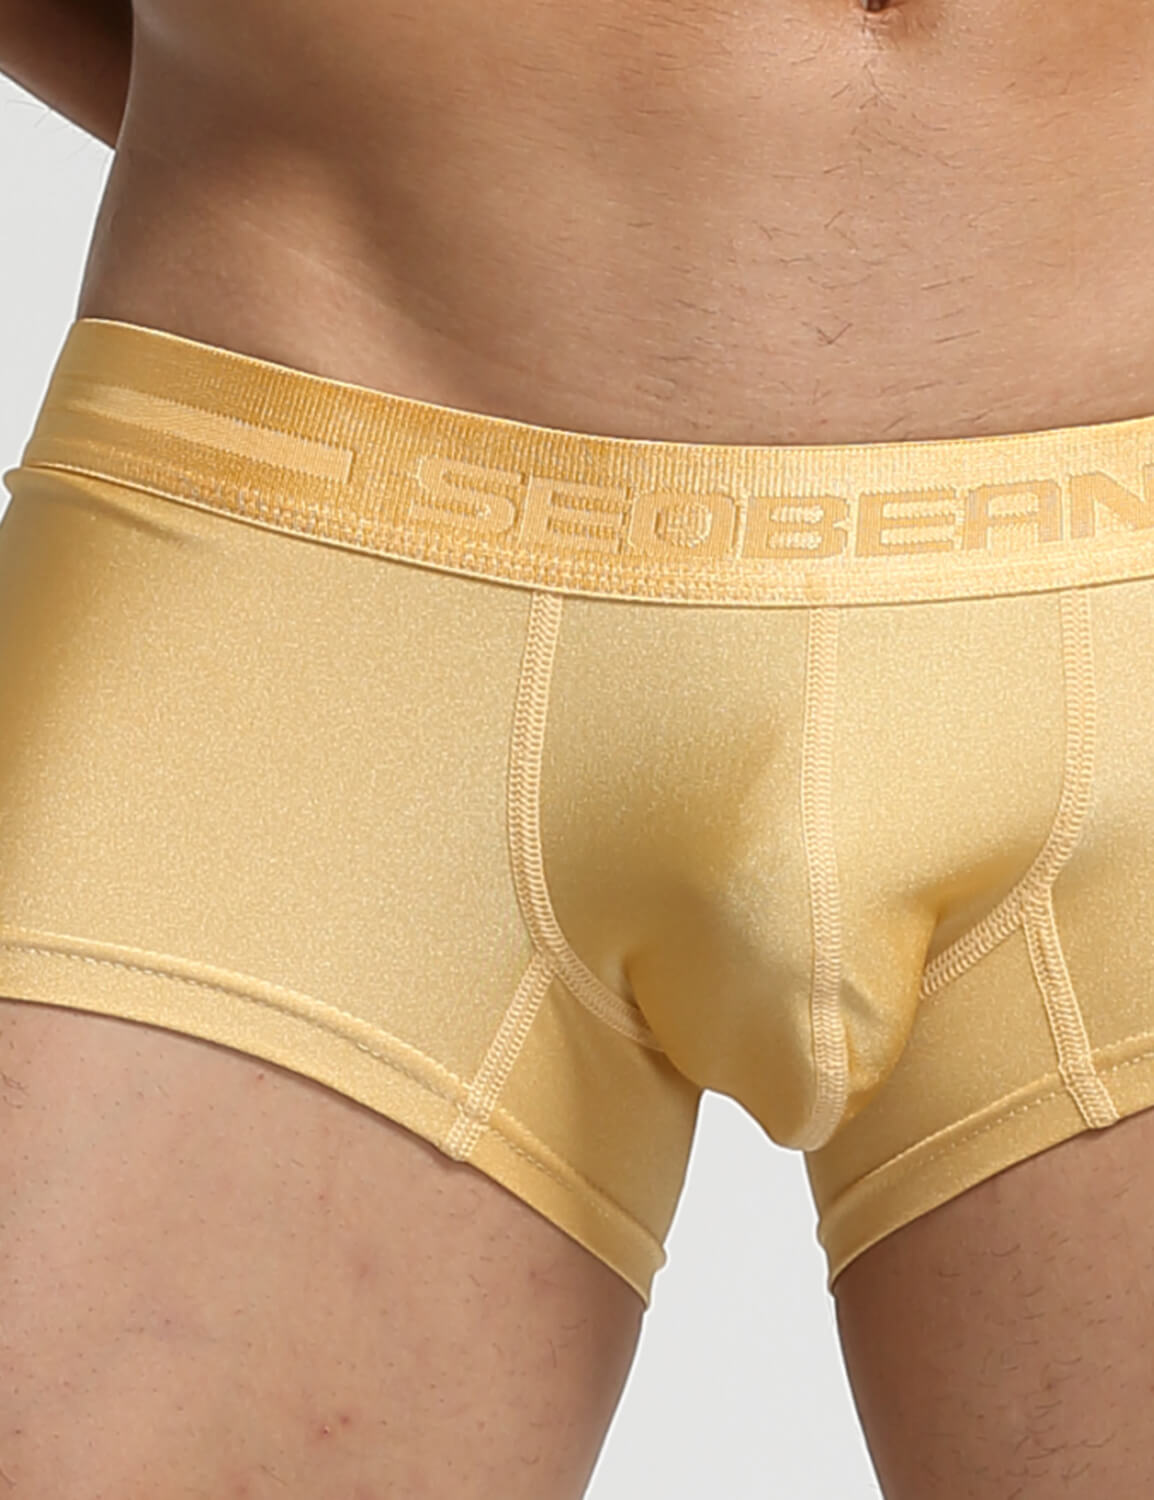 SEOBEAN Mens Shiny Gold or Silver Low Rise Boxer Briefs Underwear